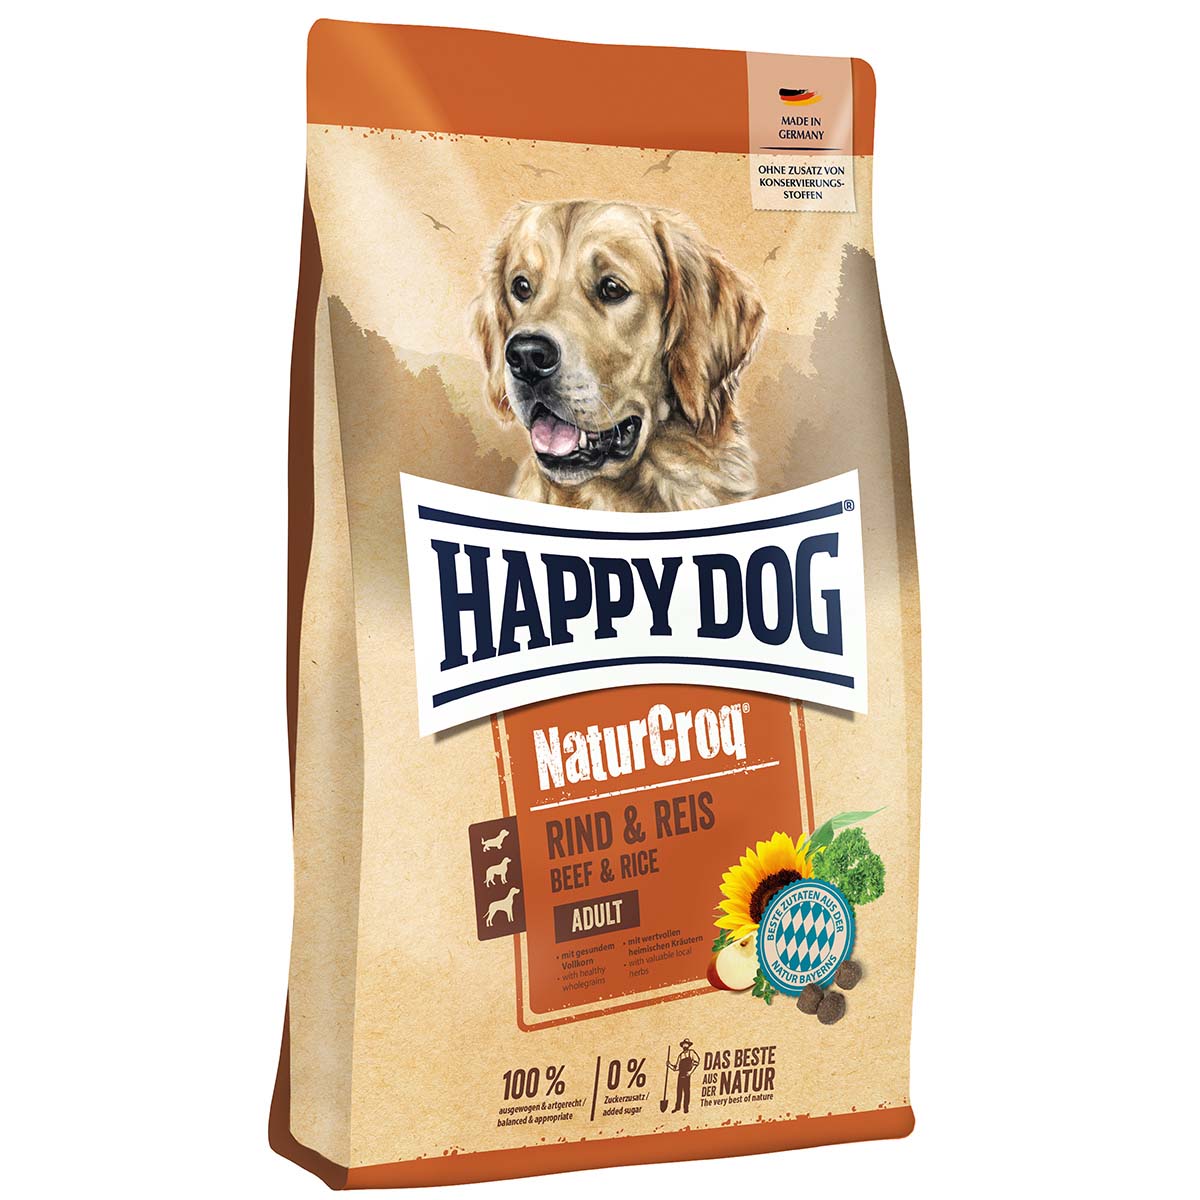 Happy Dog NaturCroq Rind & Reis 4kg von Happy Dog